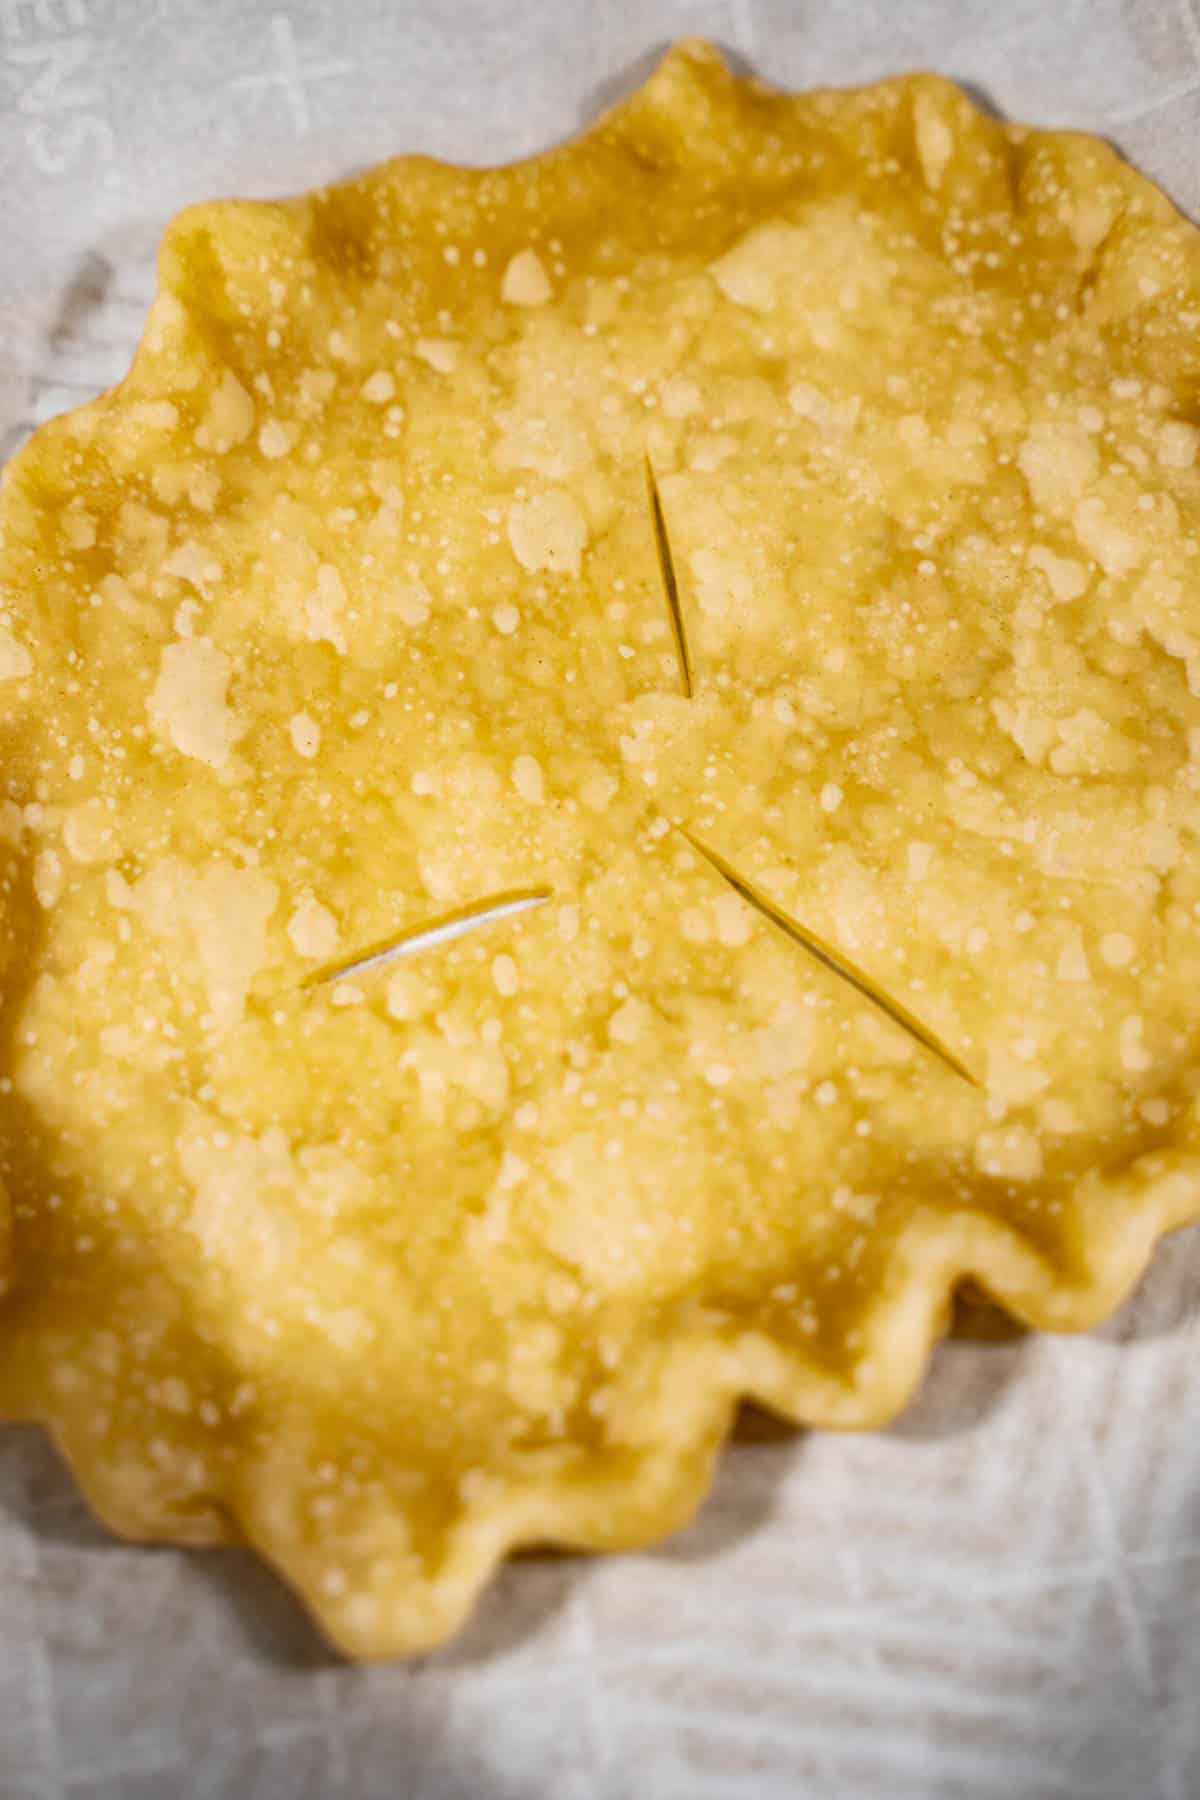 Individual pot pie crust par baked on a baking sheet.
